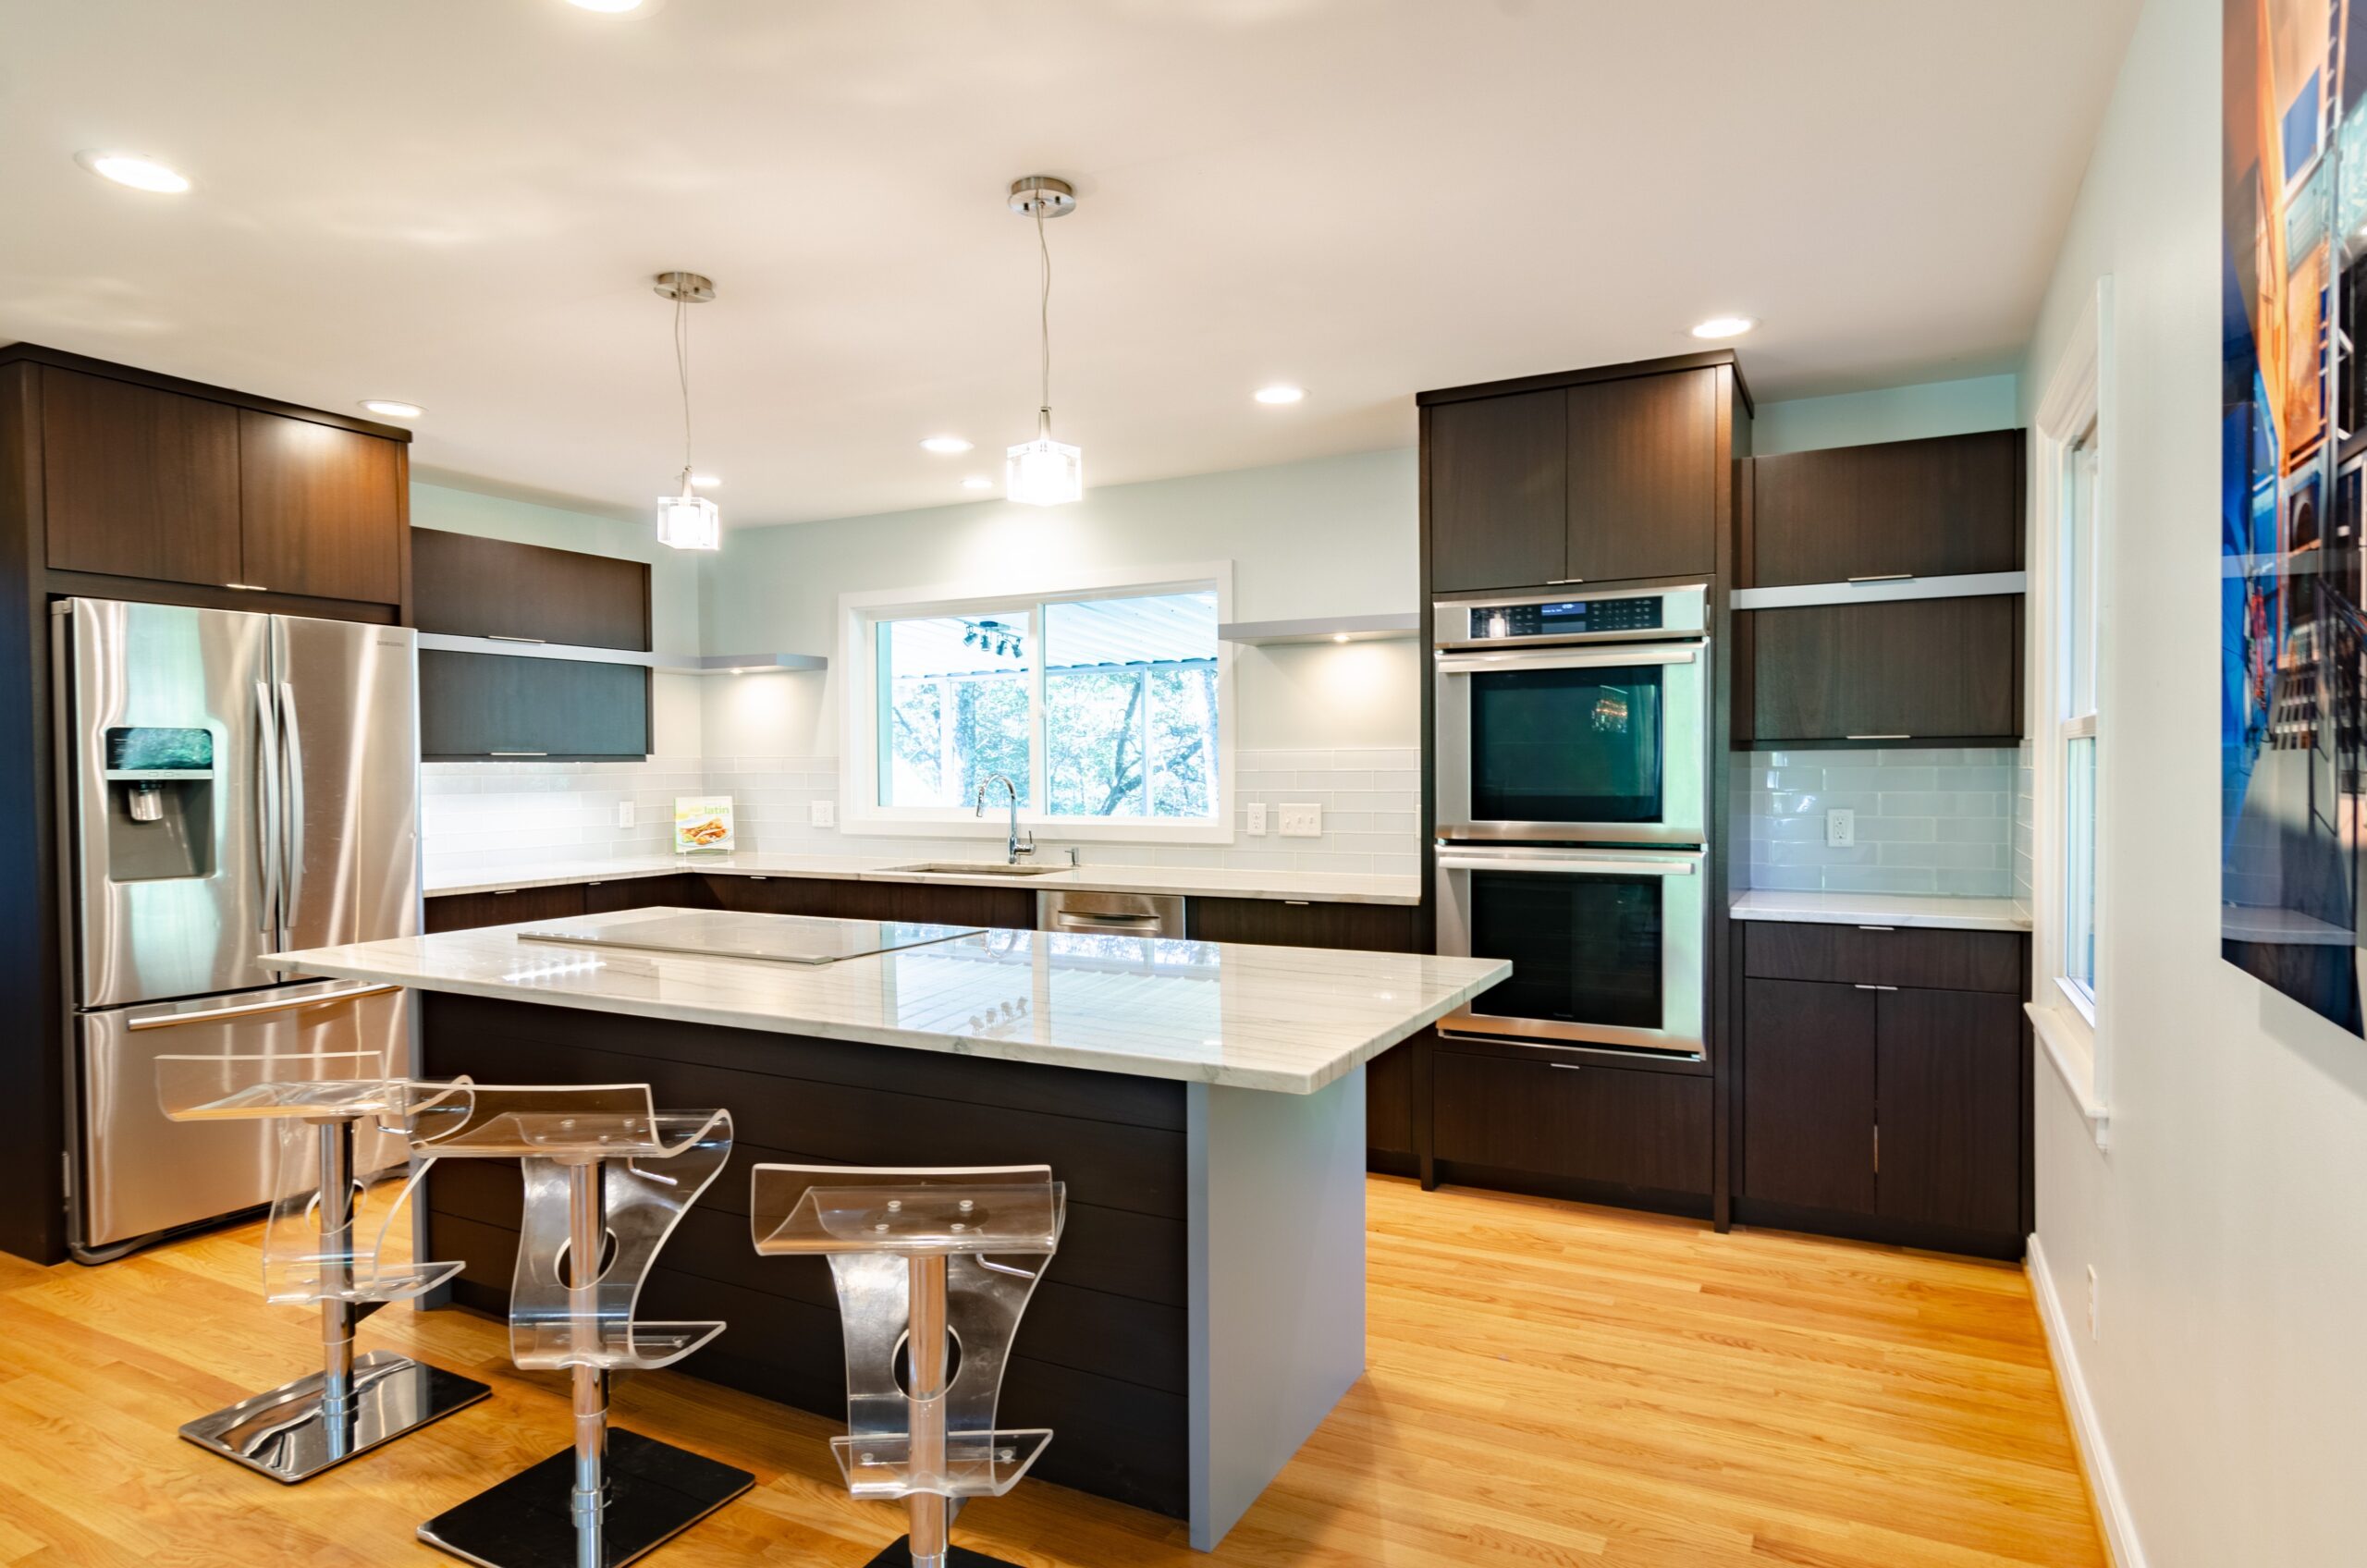 Wooden Kitchen Design with elegant lighting & Wooden cabinets